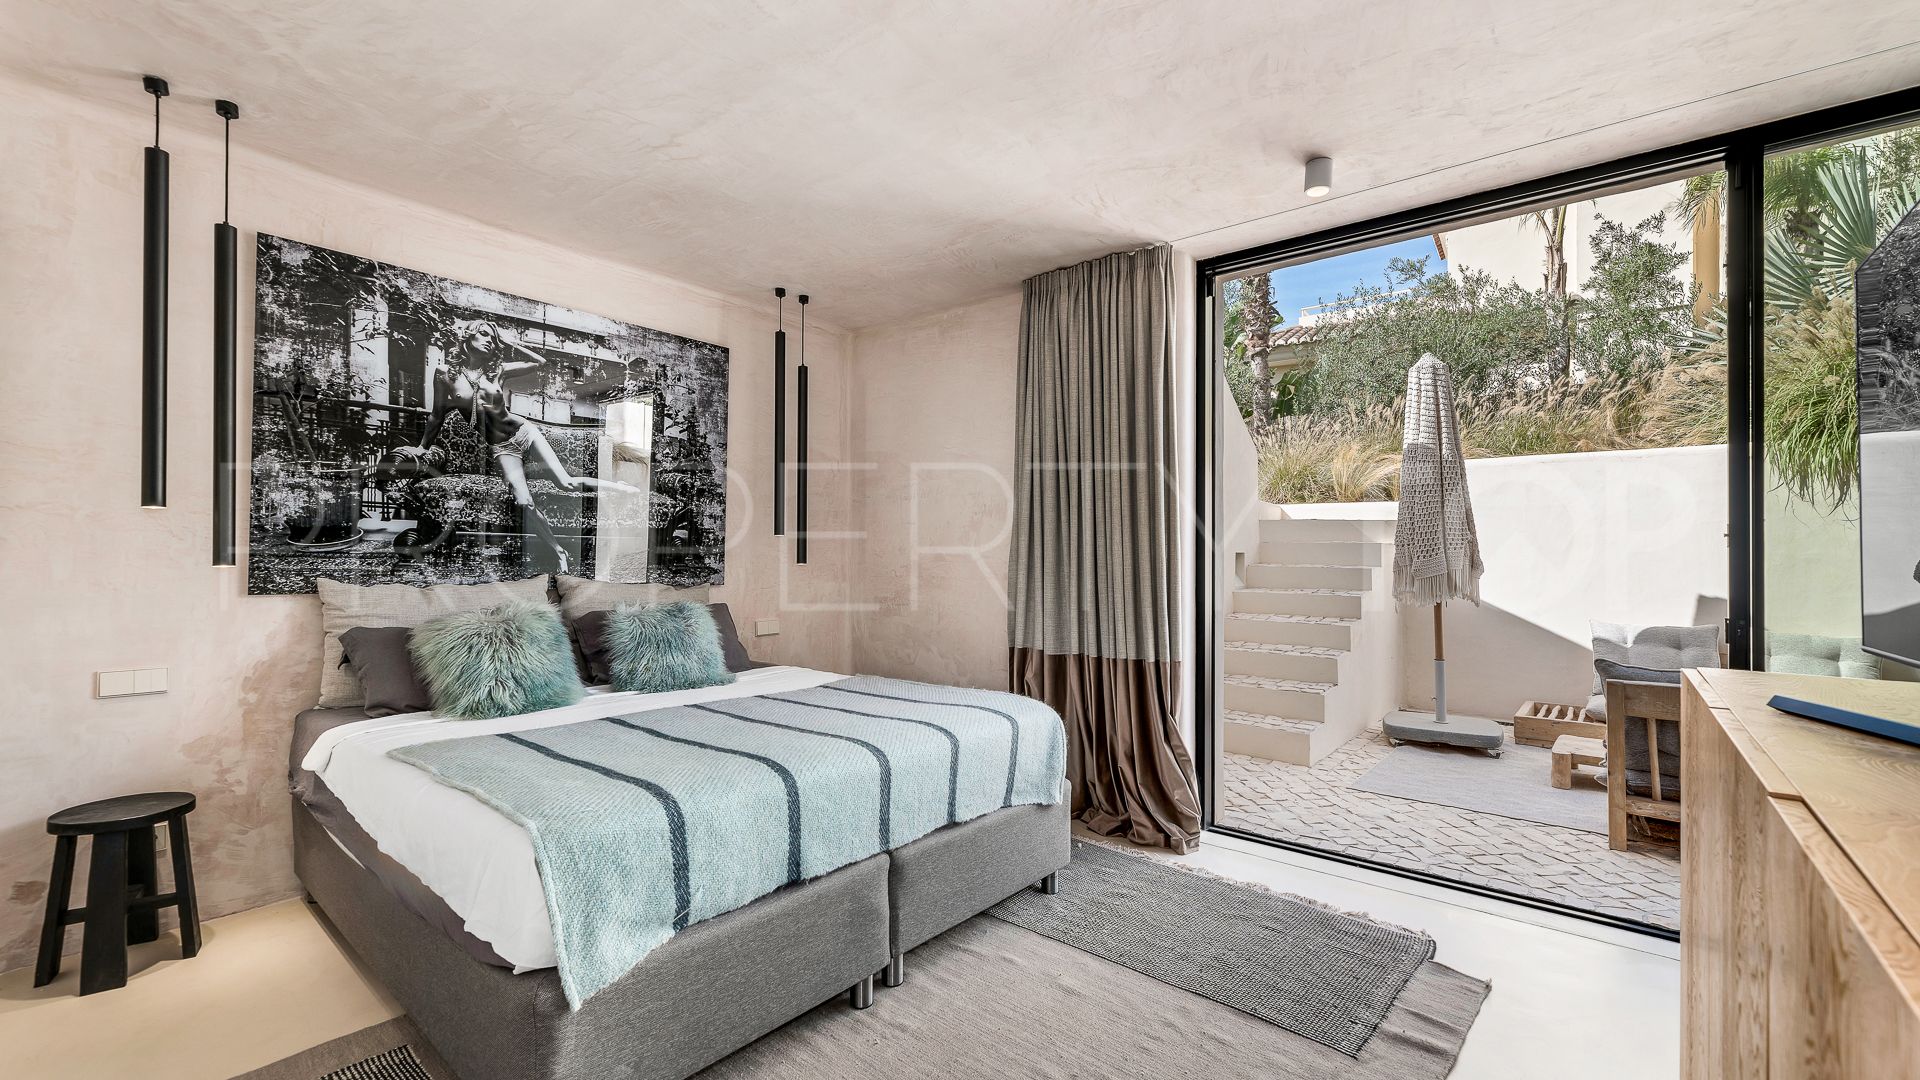 4 bedrooms villa in Marbesa for sale